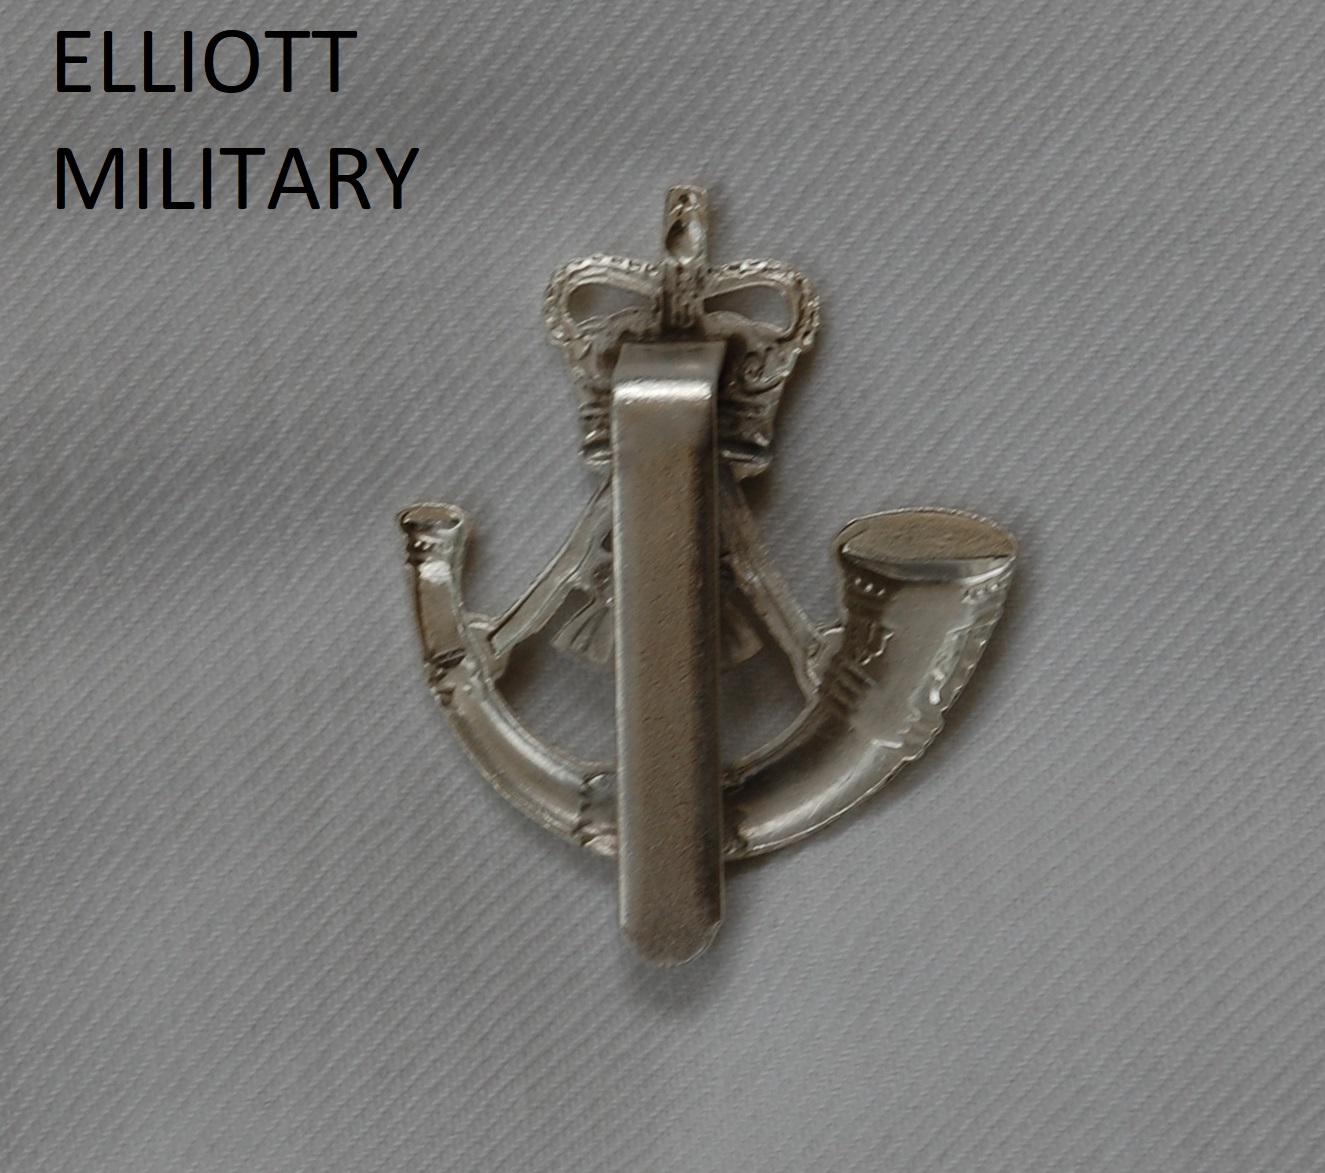 Rifles Other Ranks Cap Badge - Elliott Military